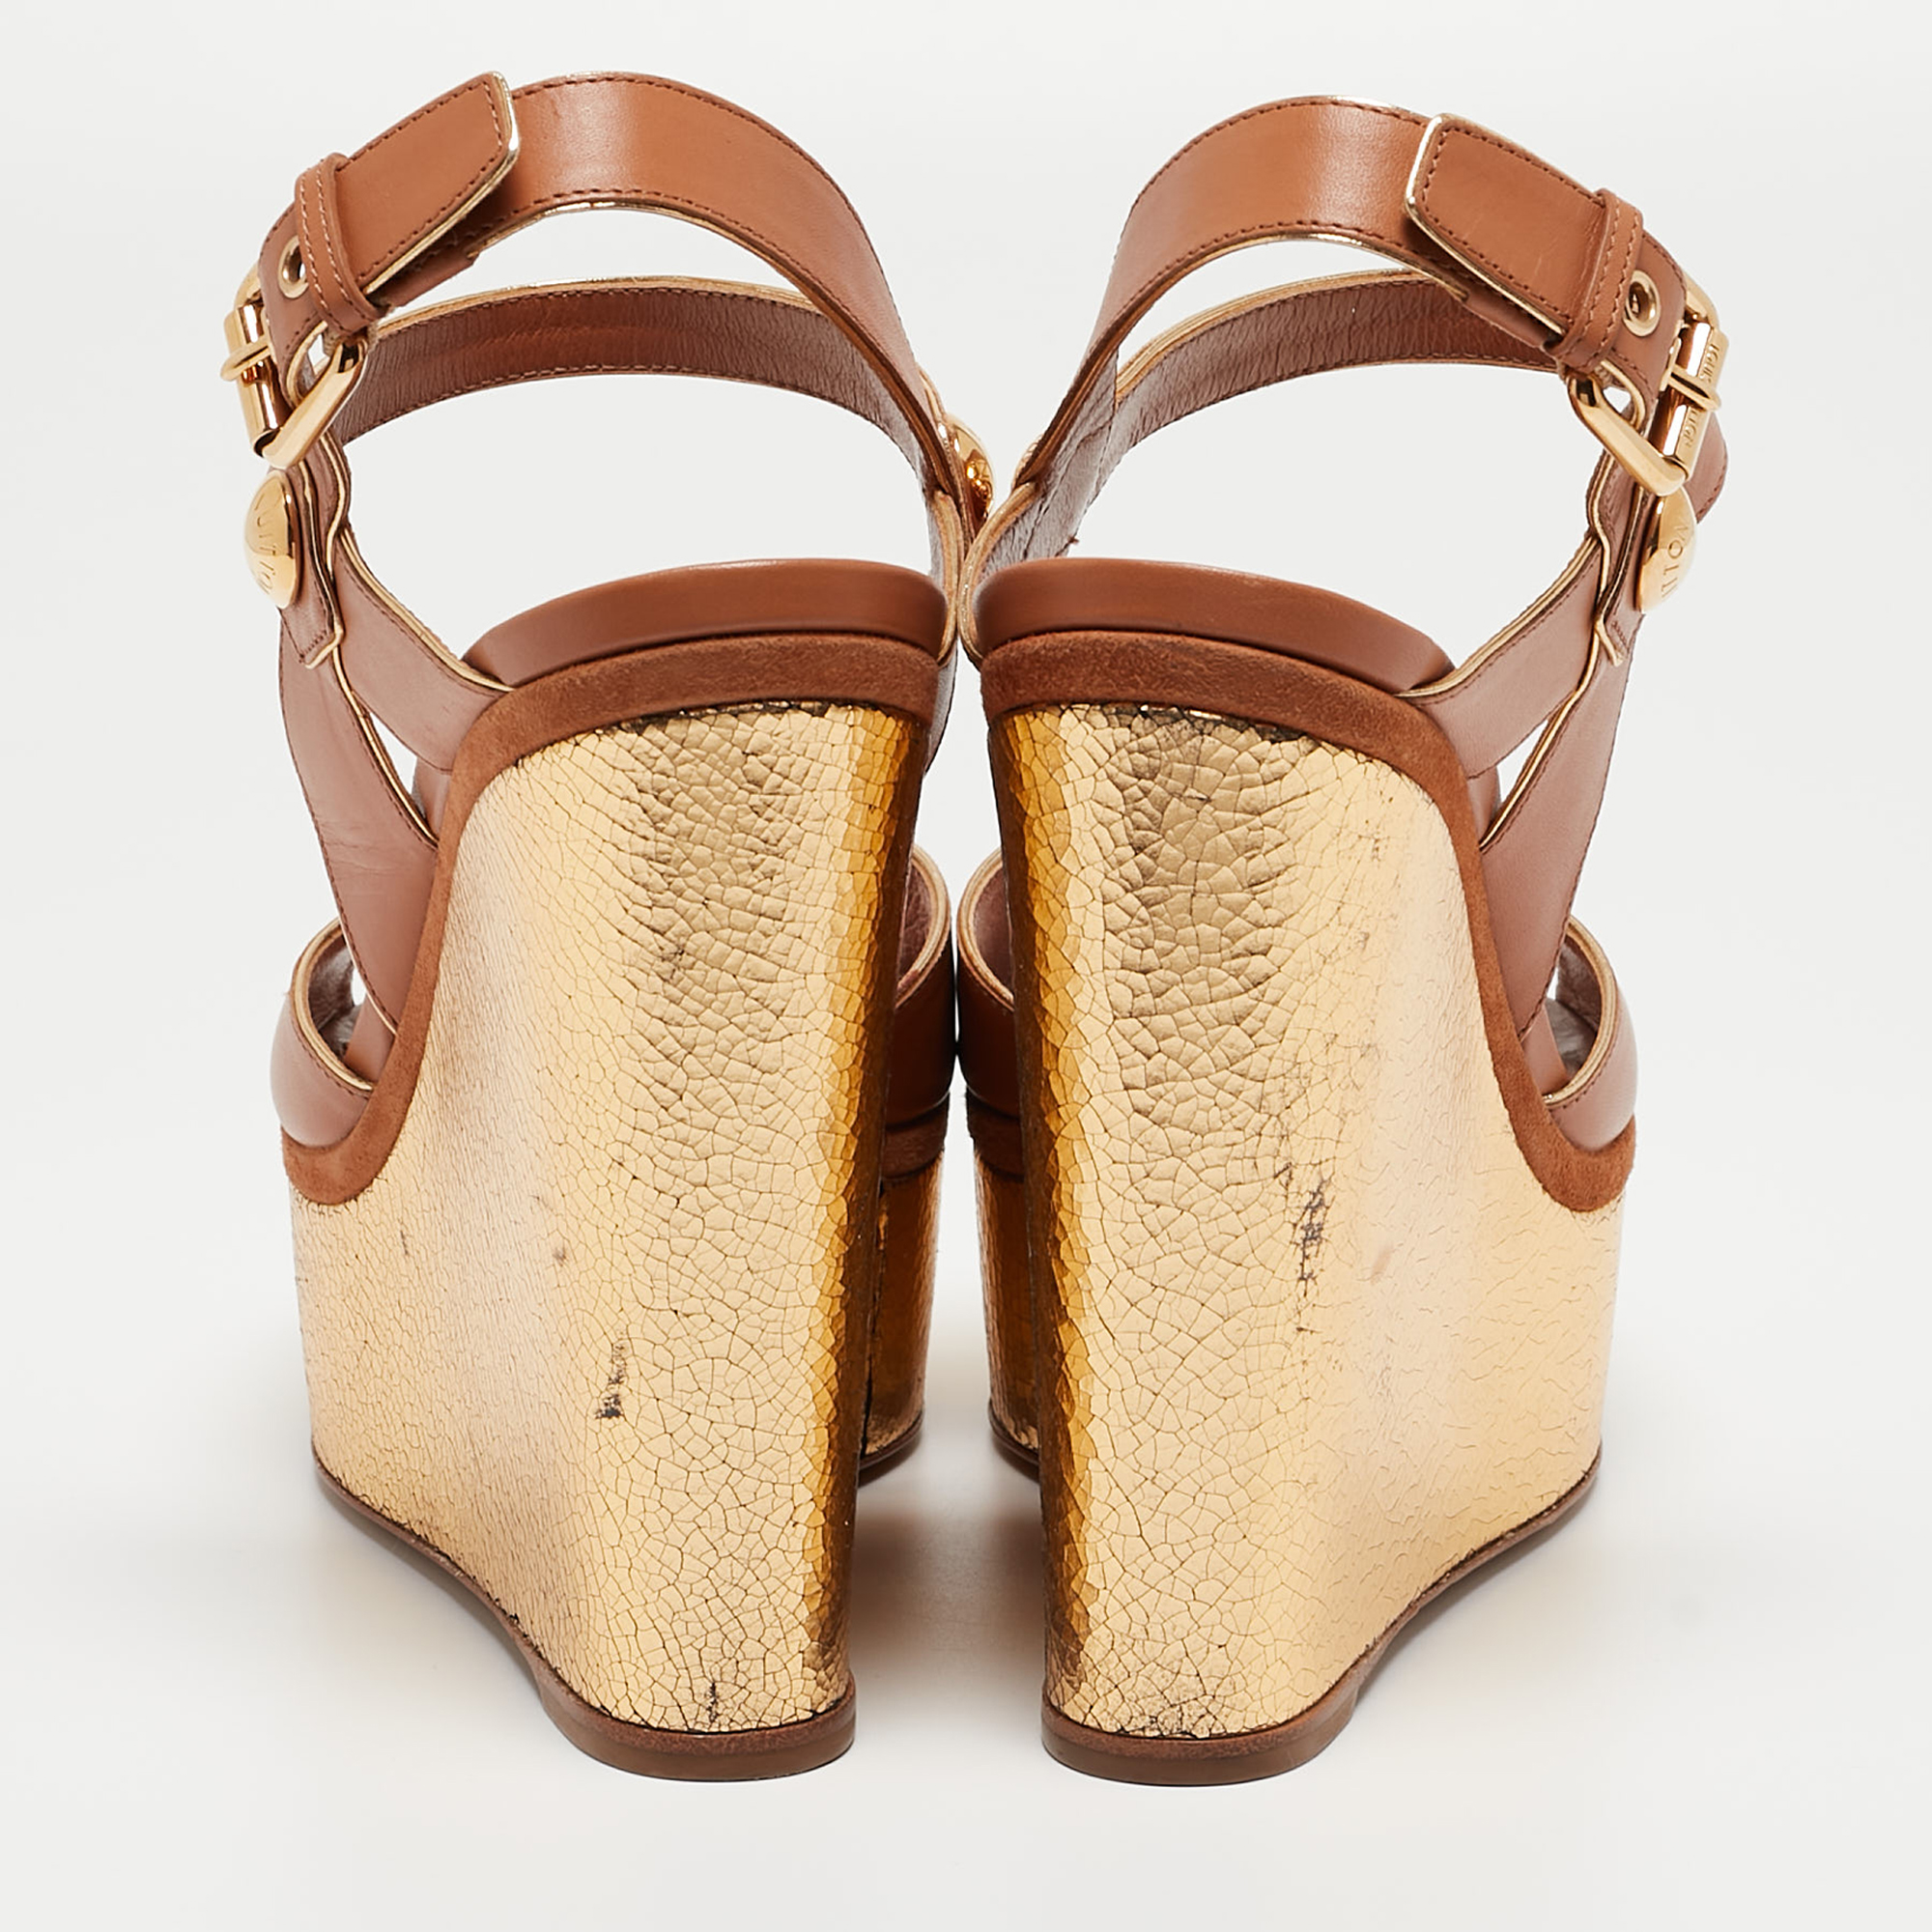 Louis Vuitton Beige Leather Wedge Sandals Size 38